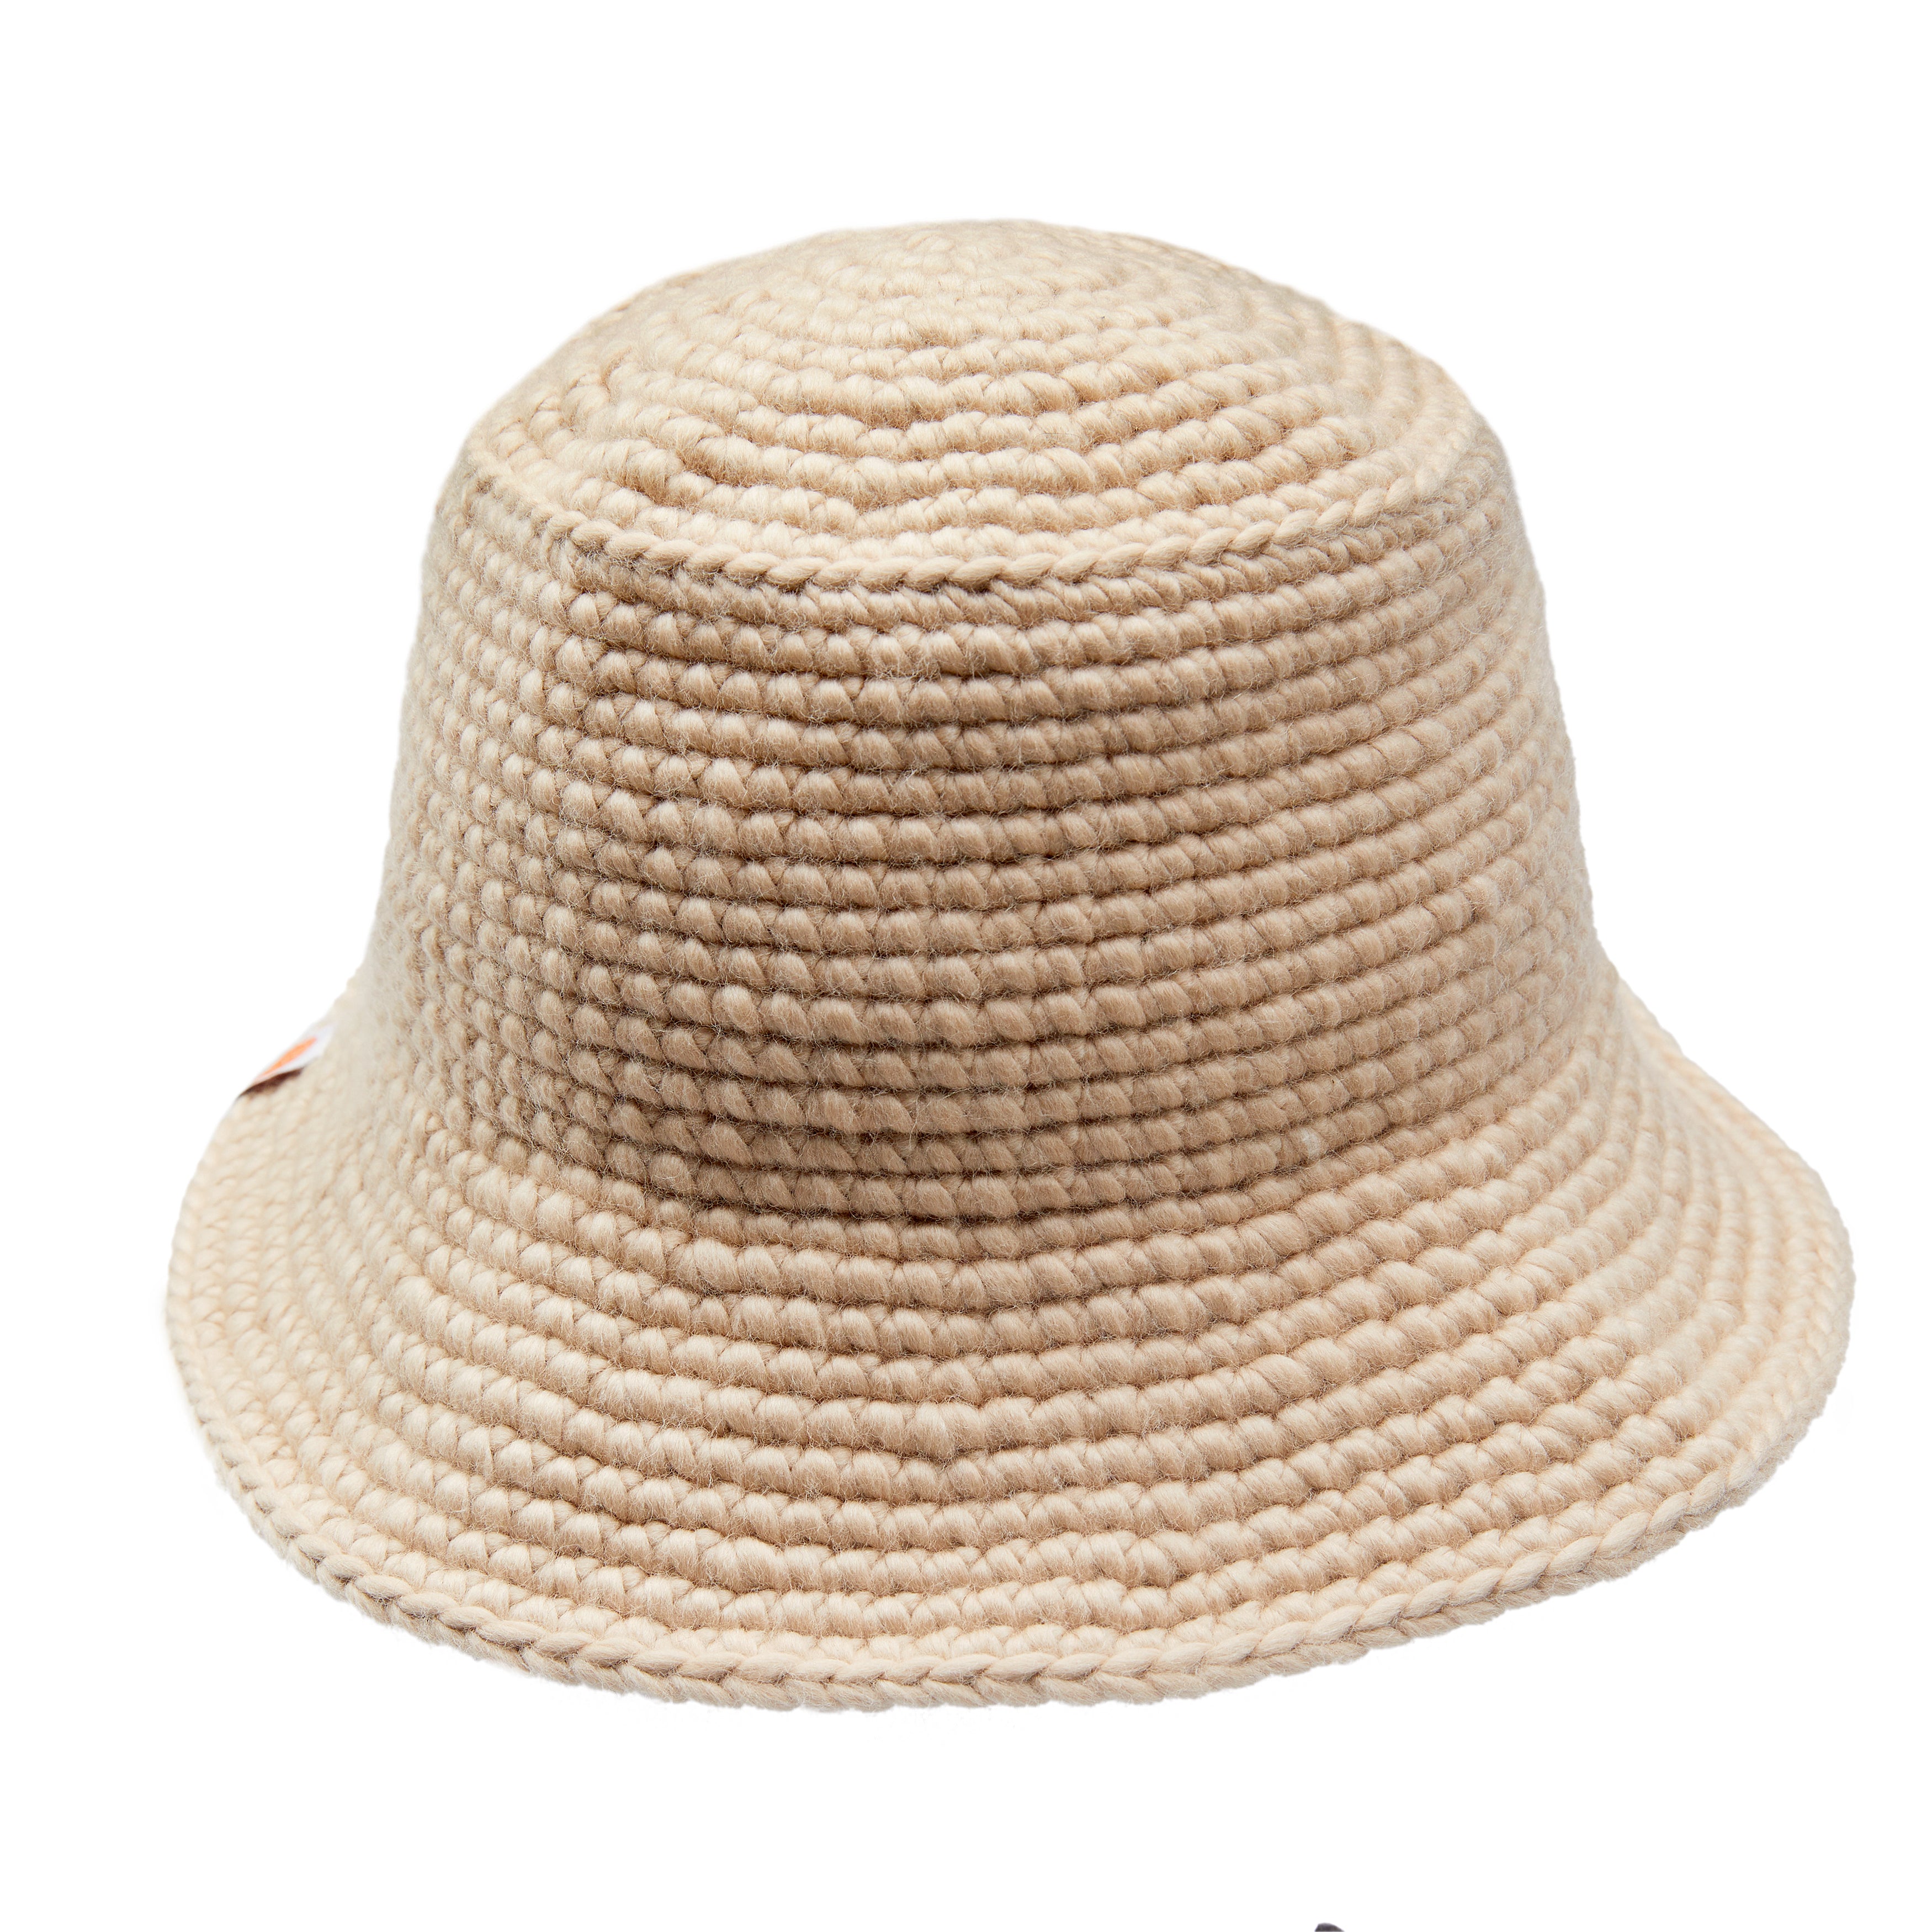 The Wool Bucket Hat, 100% Merino Wool